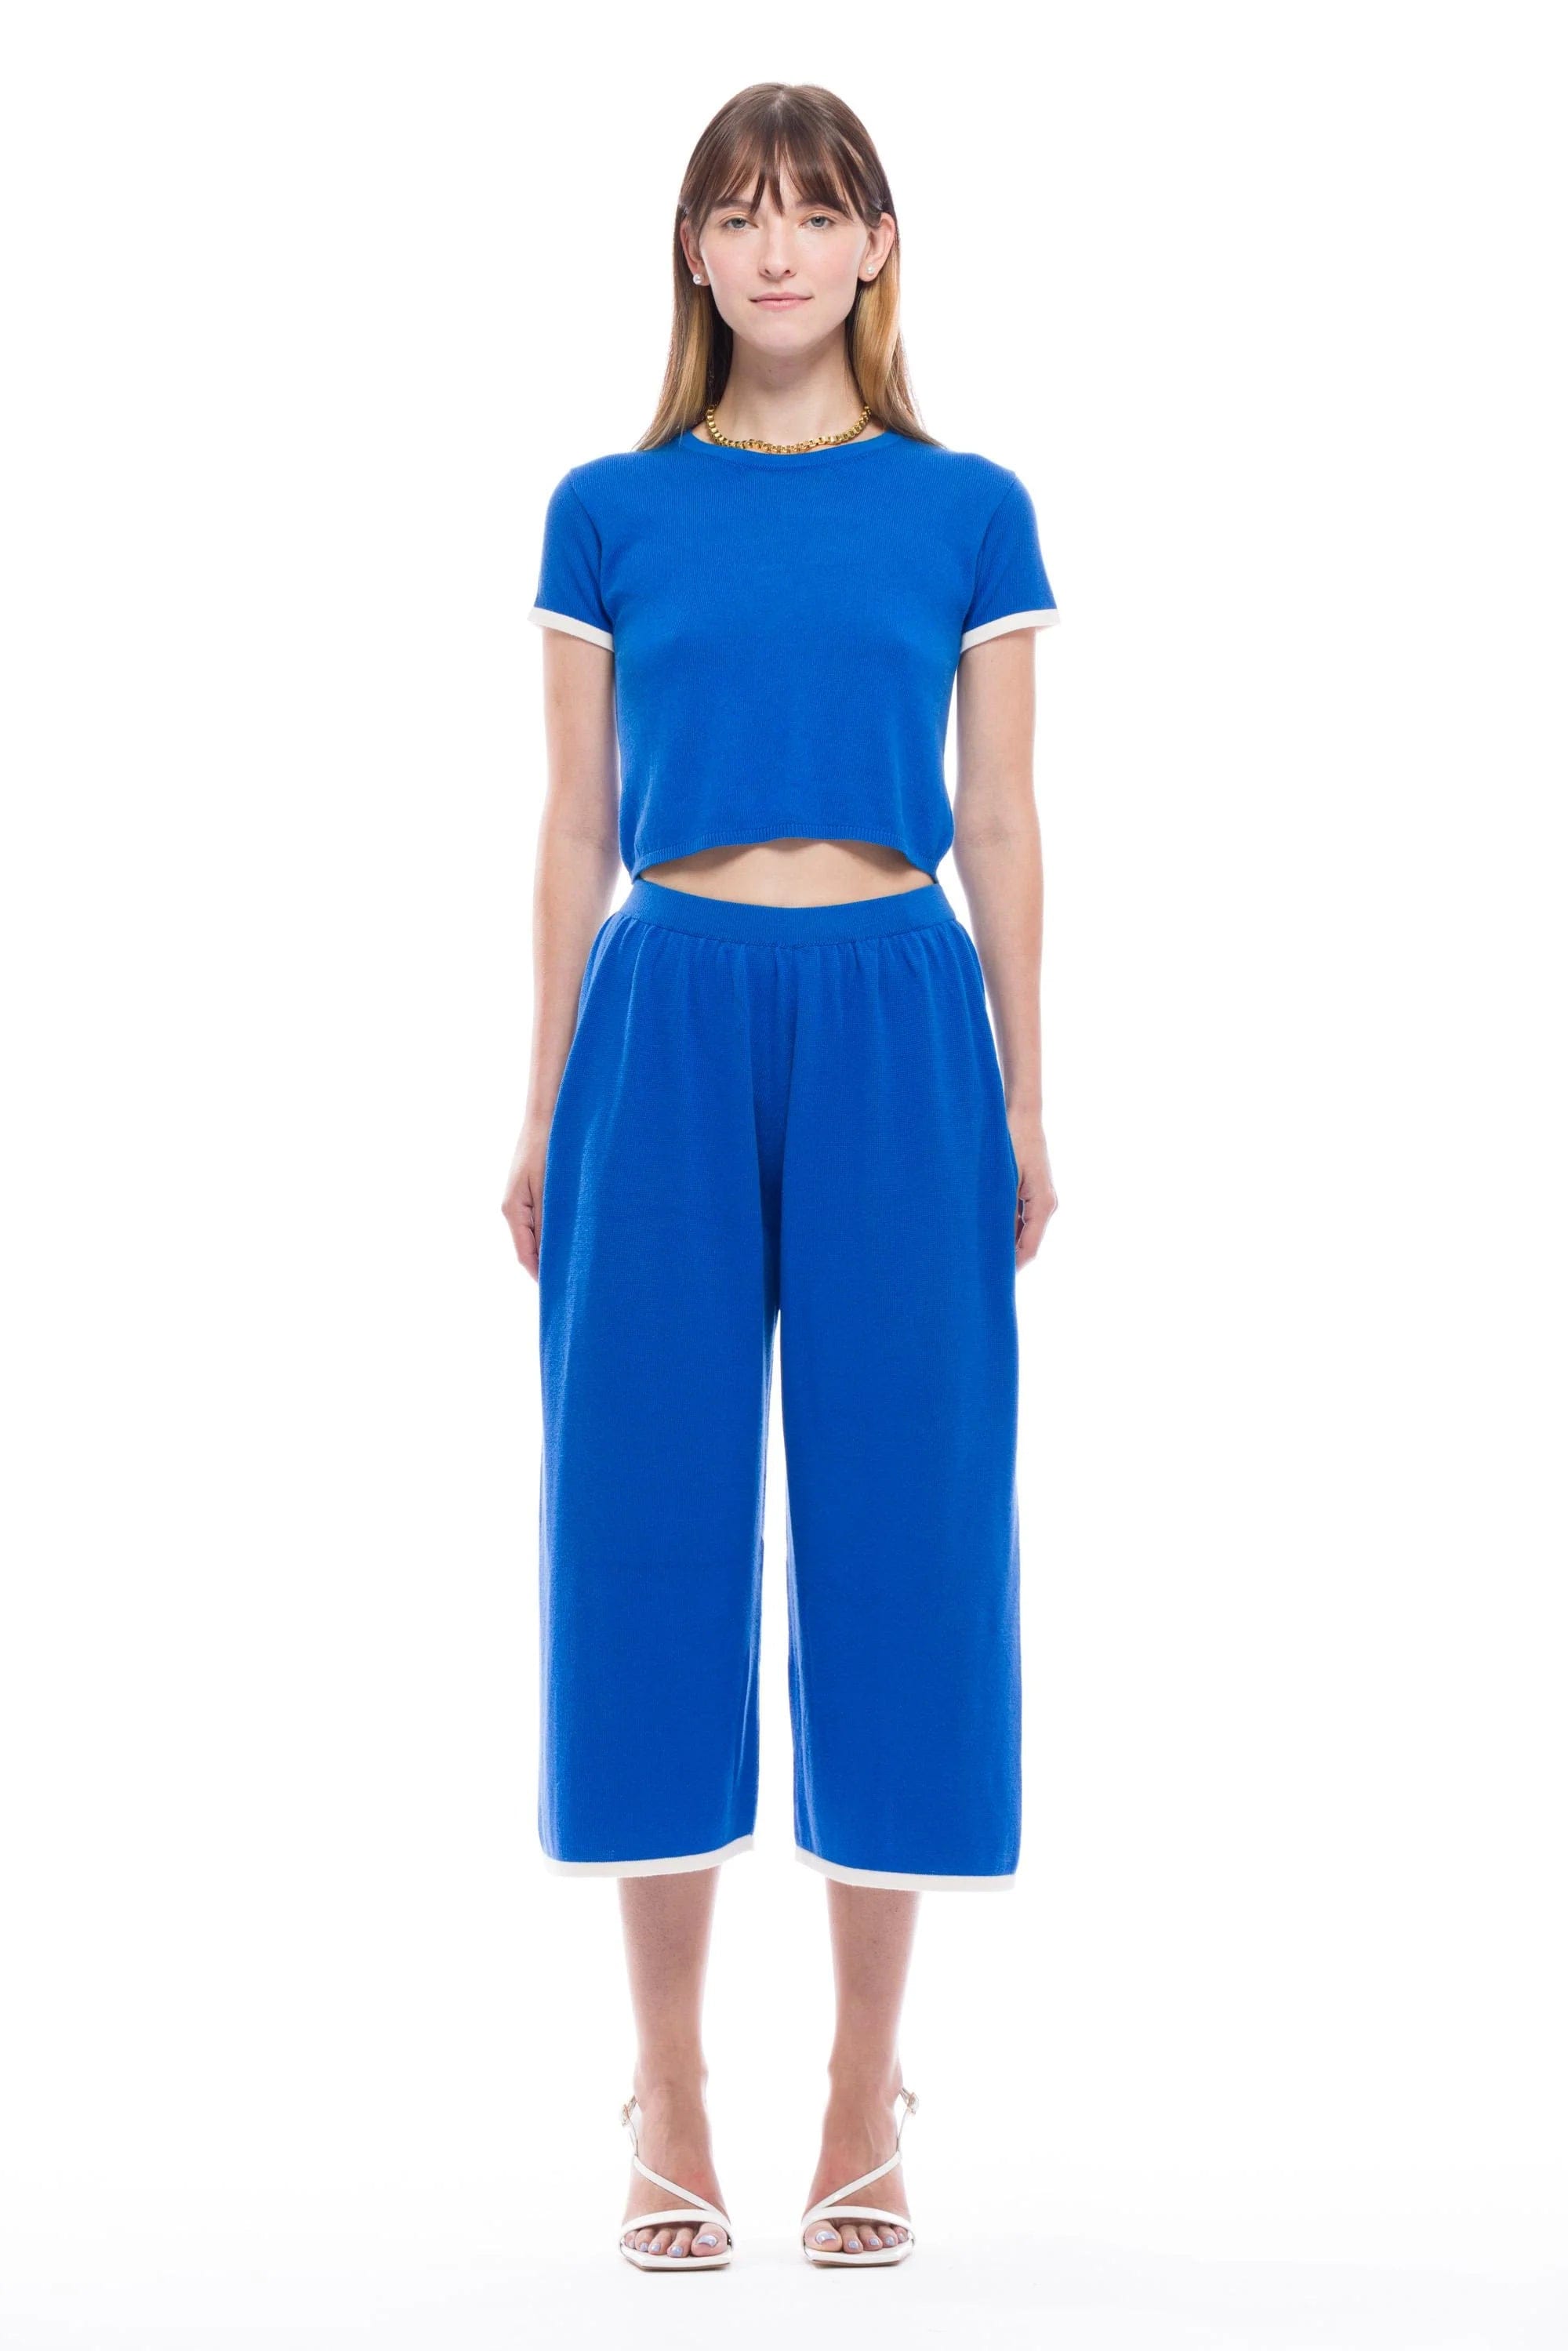 Kira Knit Long Shorts - Cobalt